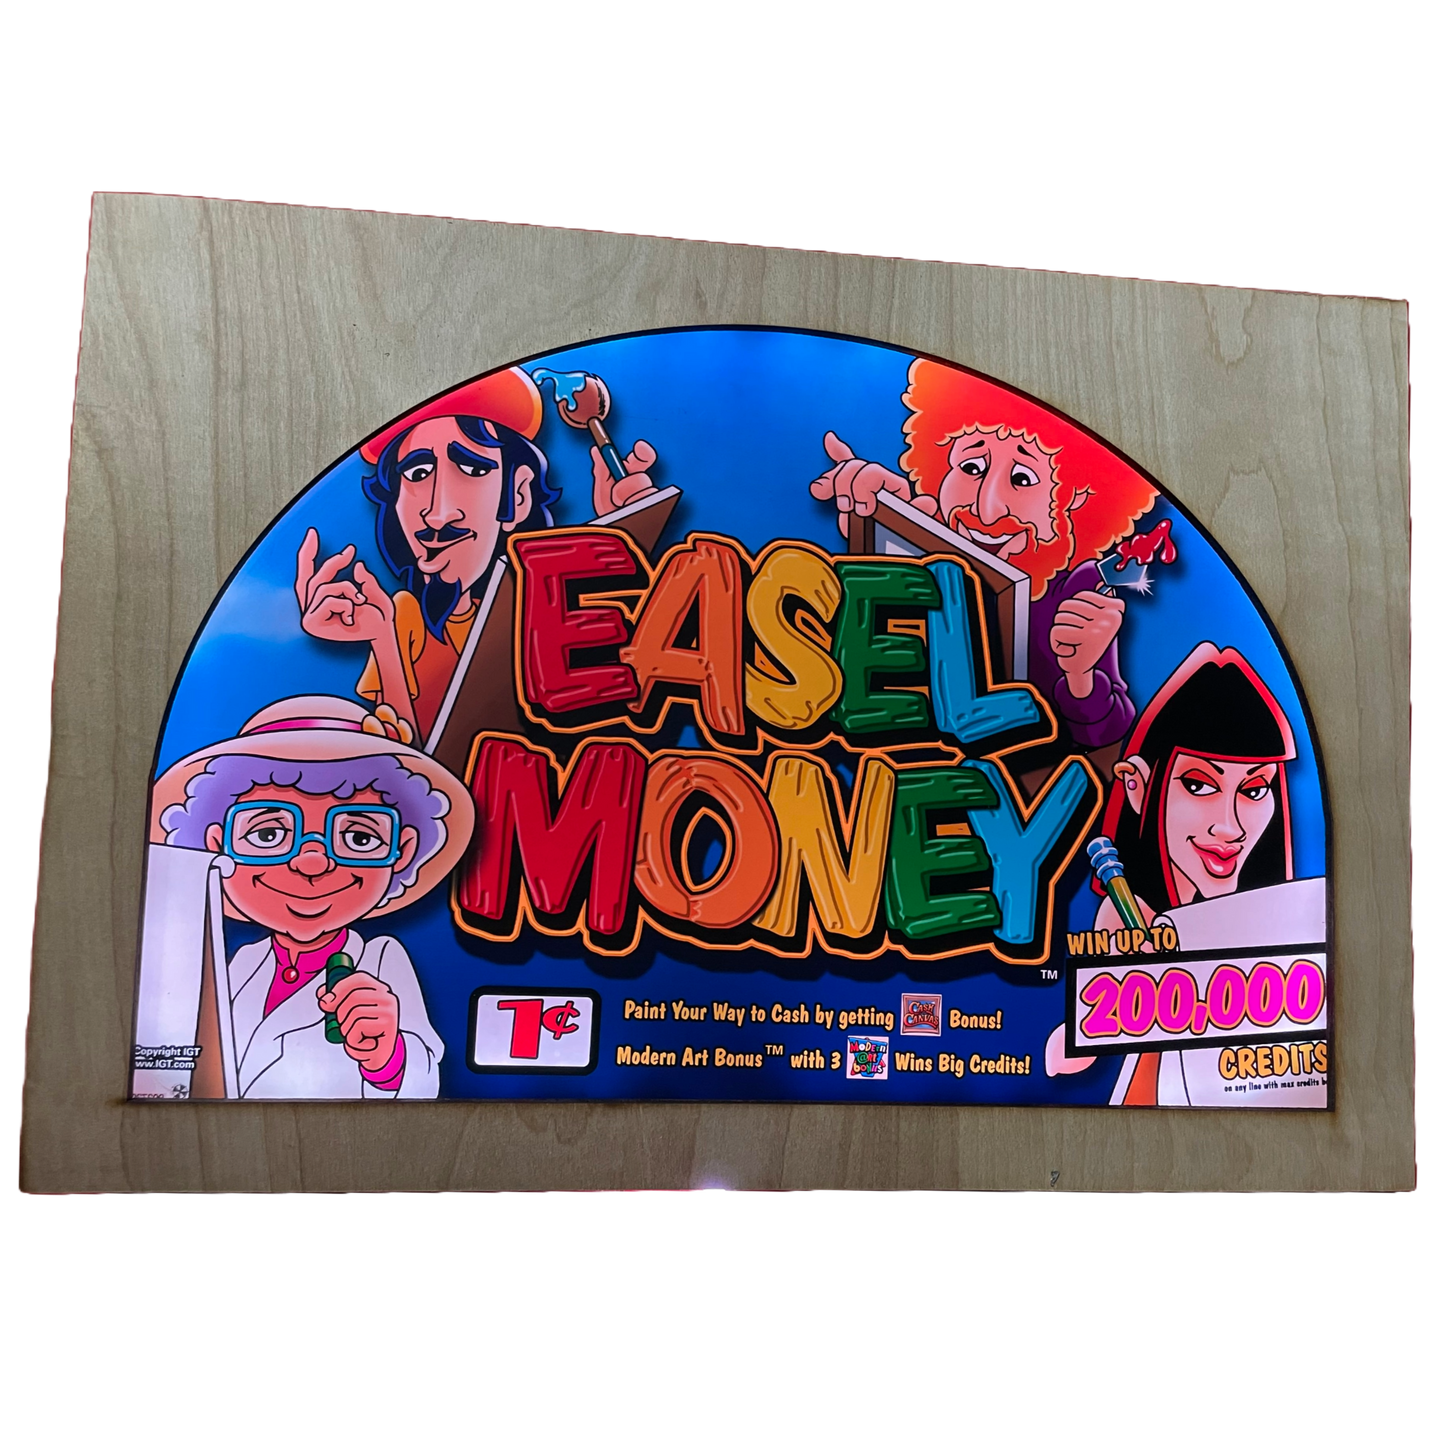 Easel Money Slot Glass